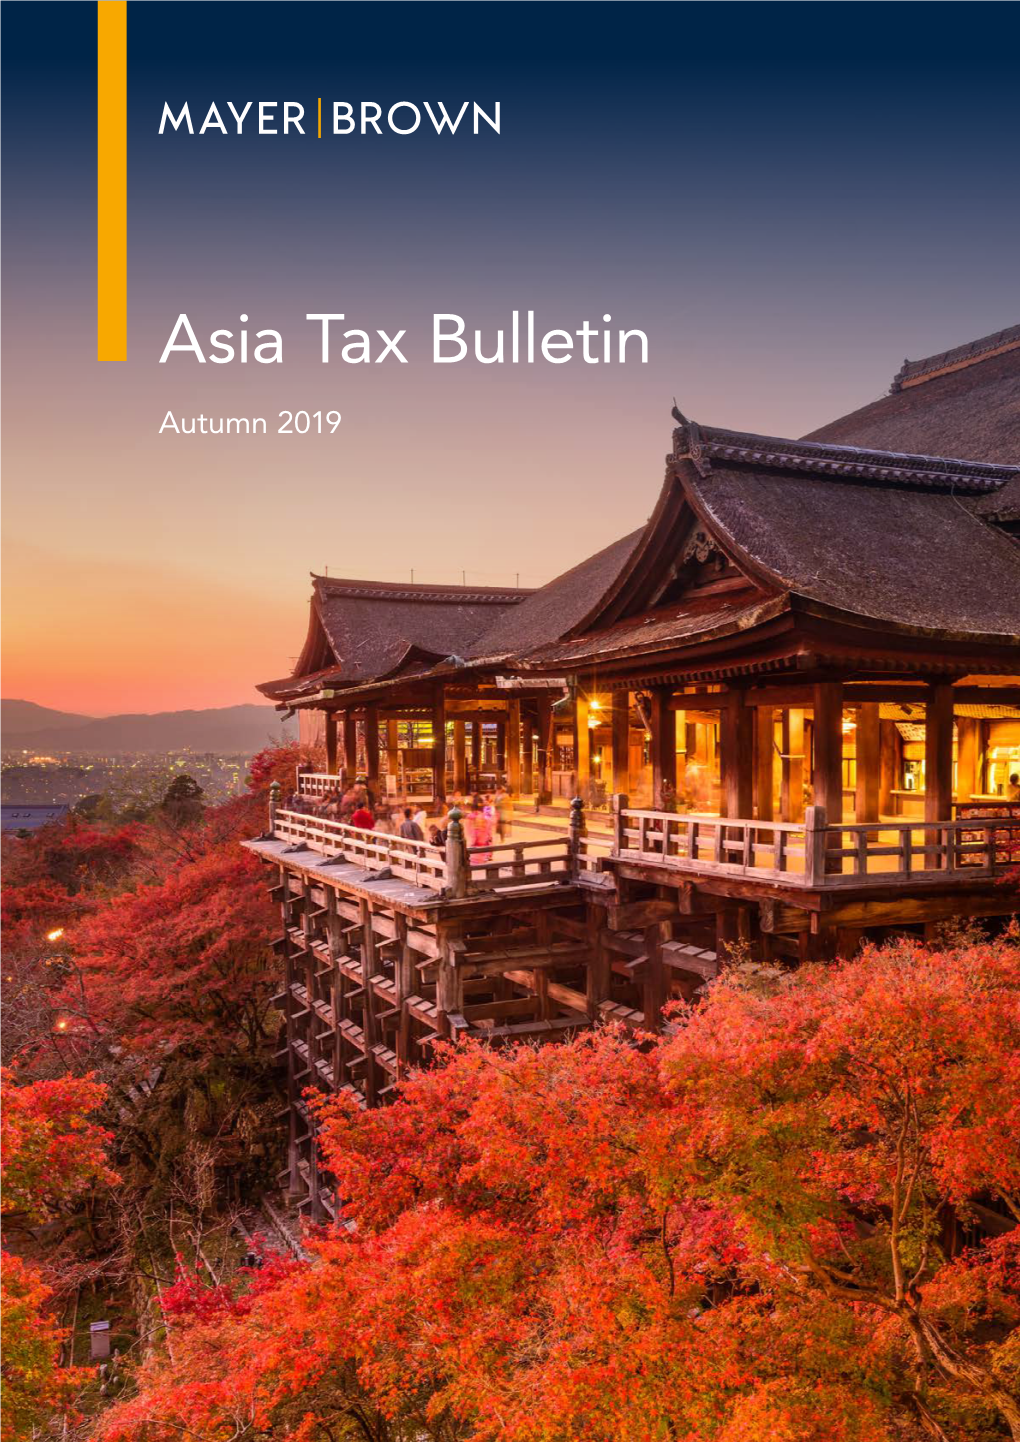 Asia Tax Bulletin Autumn 2019 in This Edition